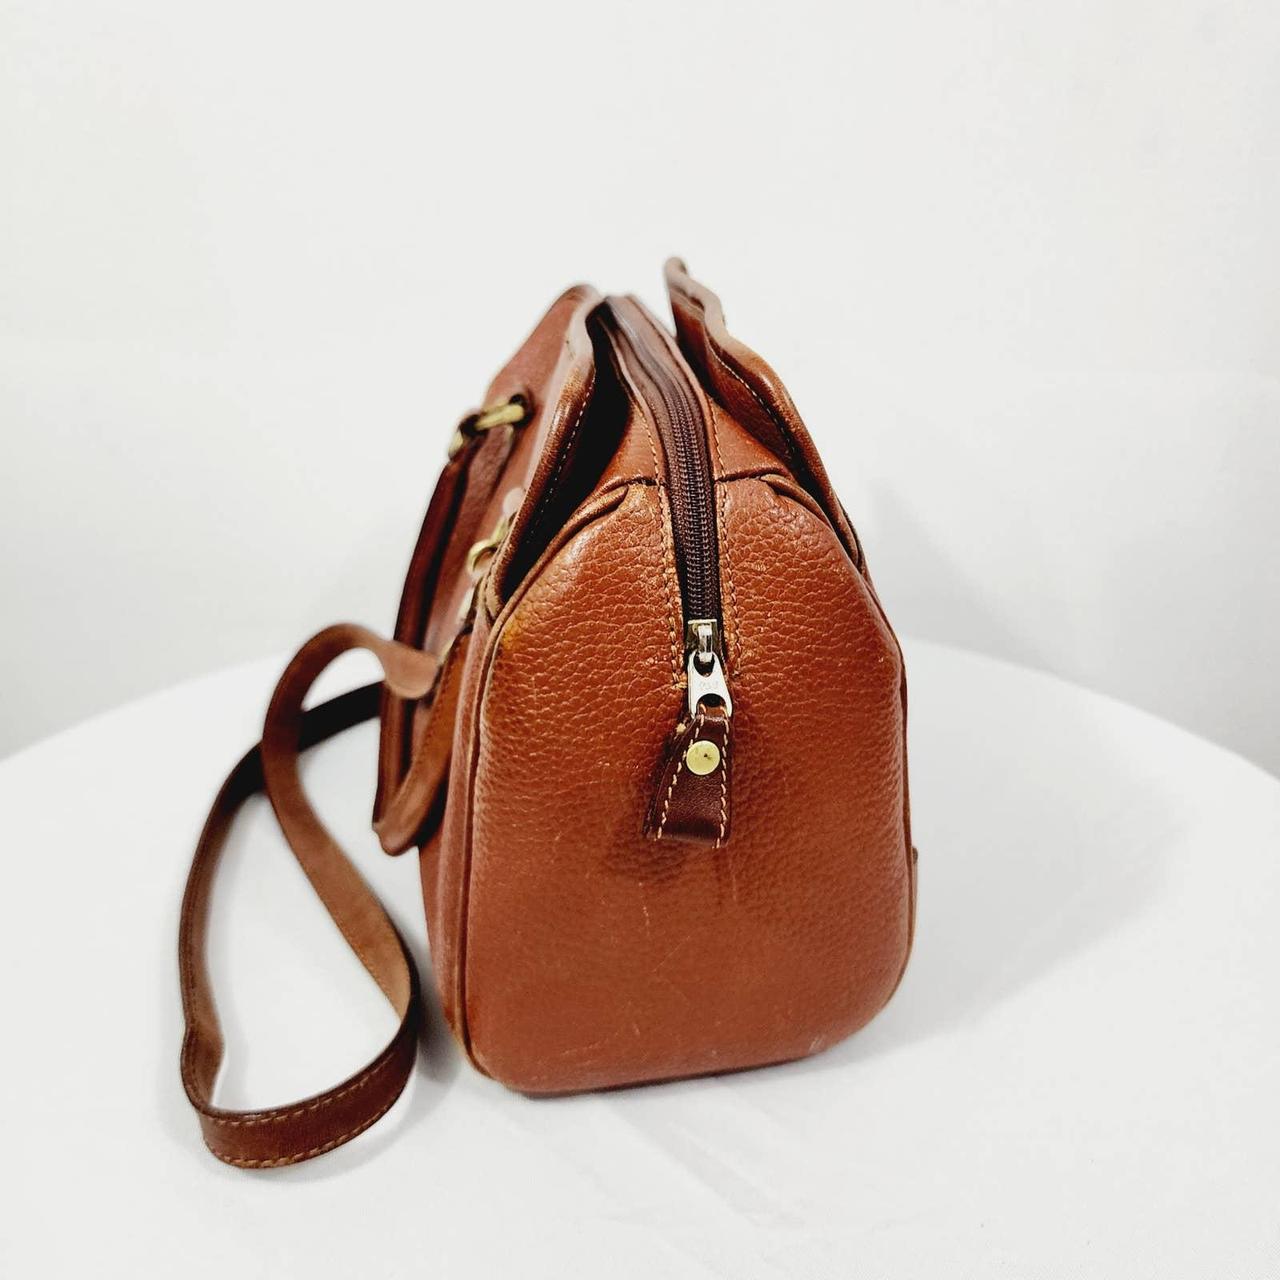 Vintage Liz Claiborne speedy style purse